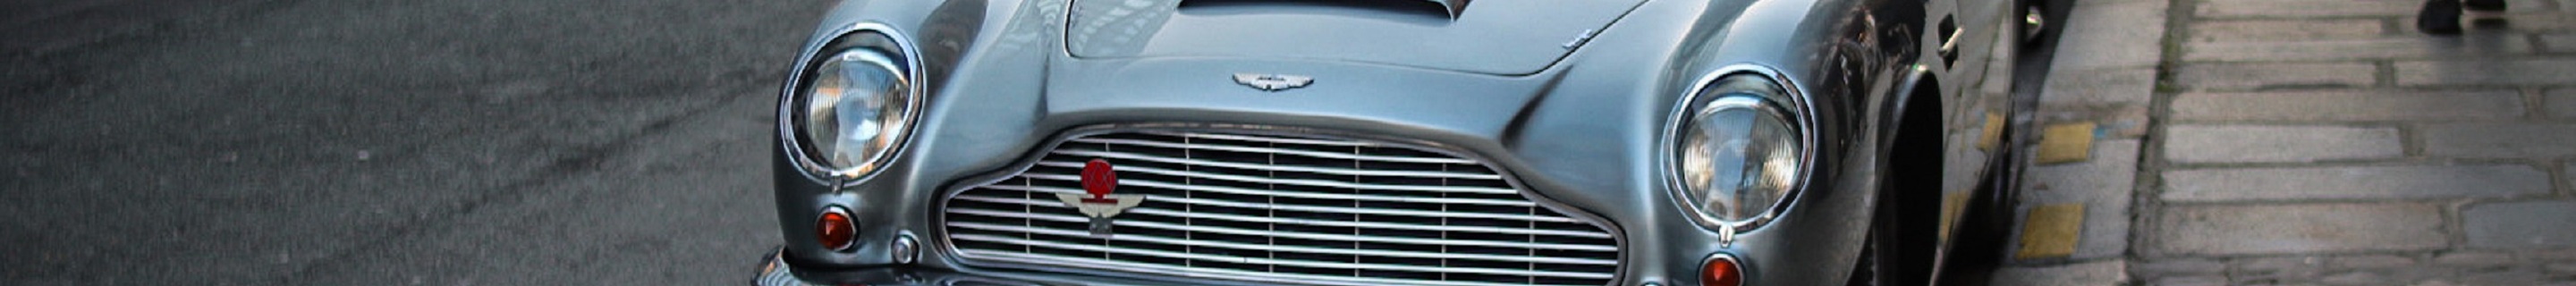 Aston Martin DB6 MKII